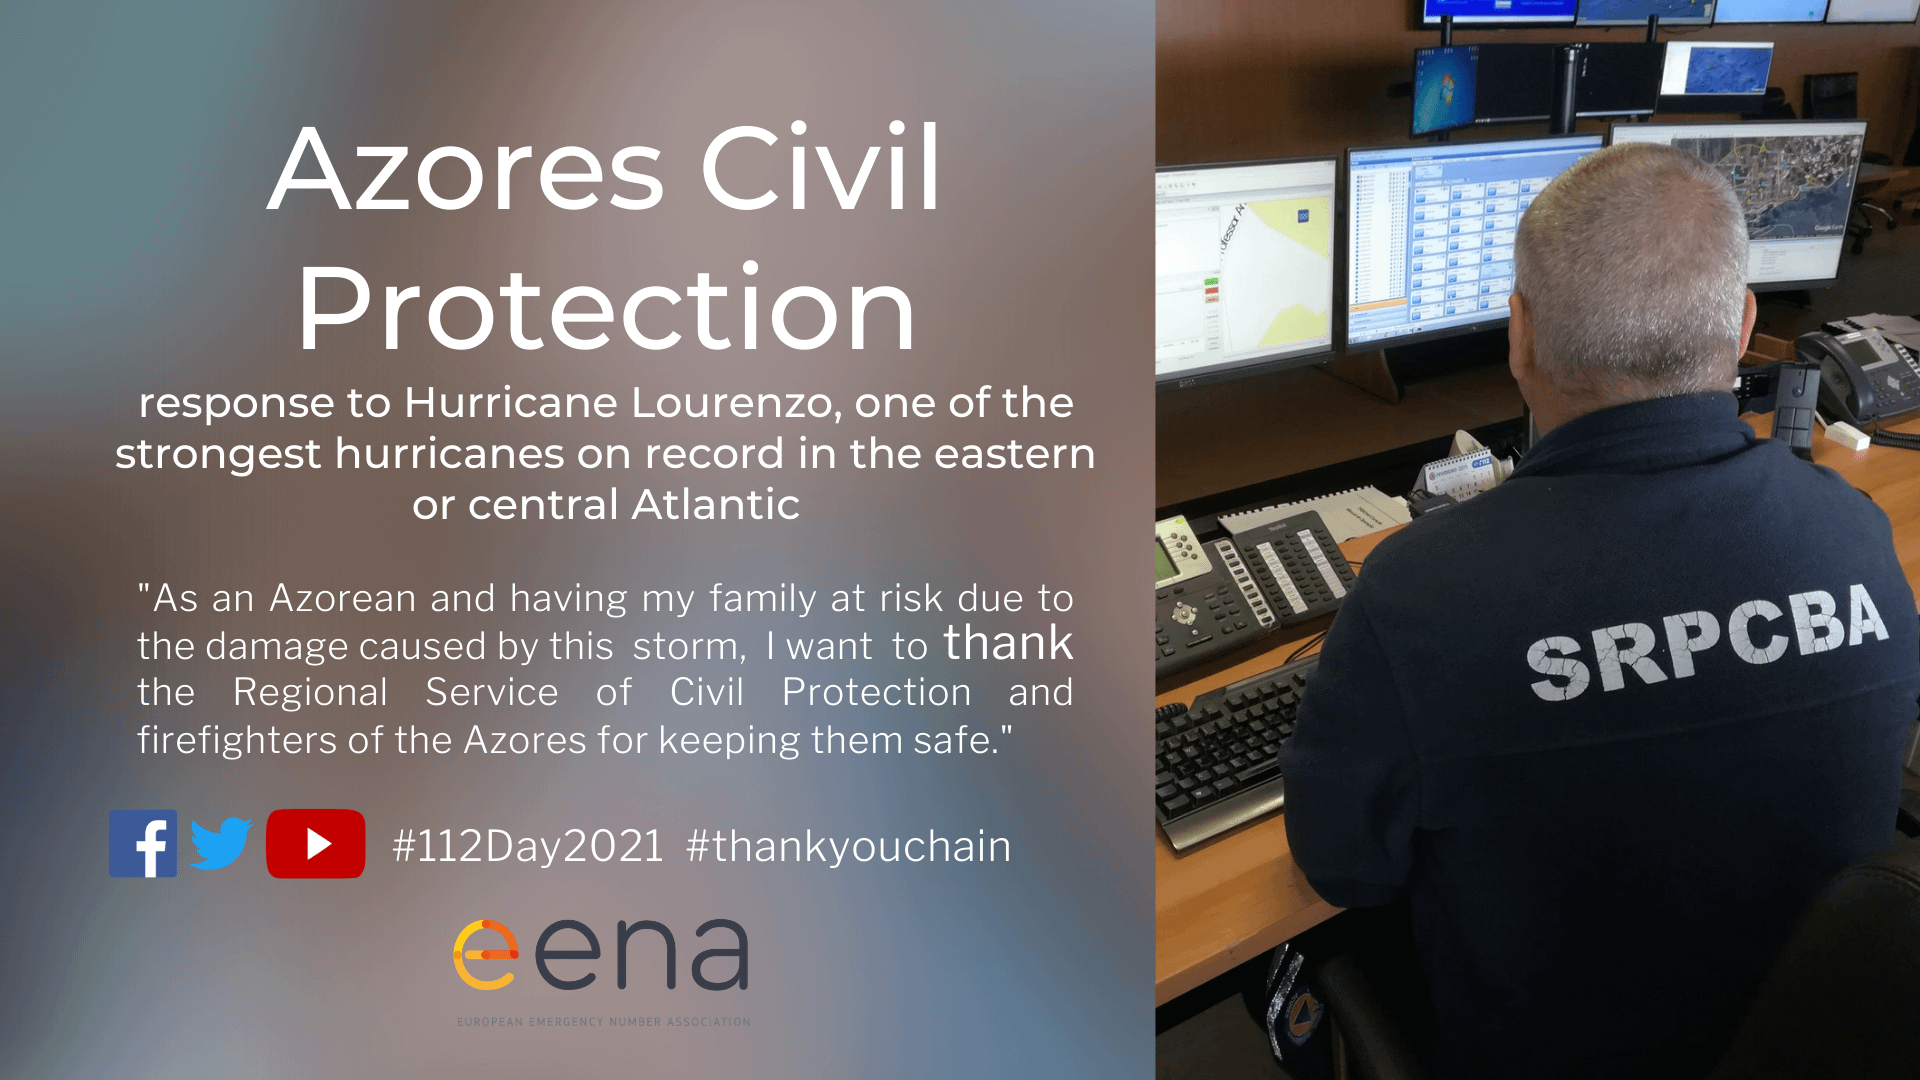 Citizen thanks the Azores Civil Protection